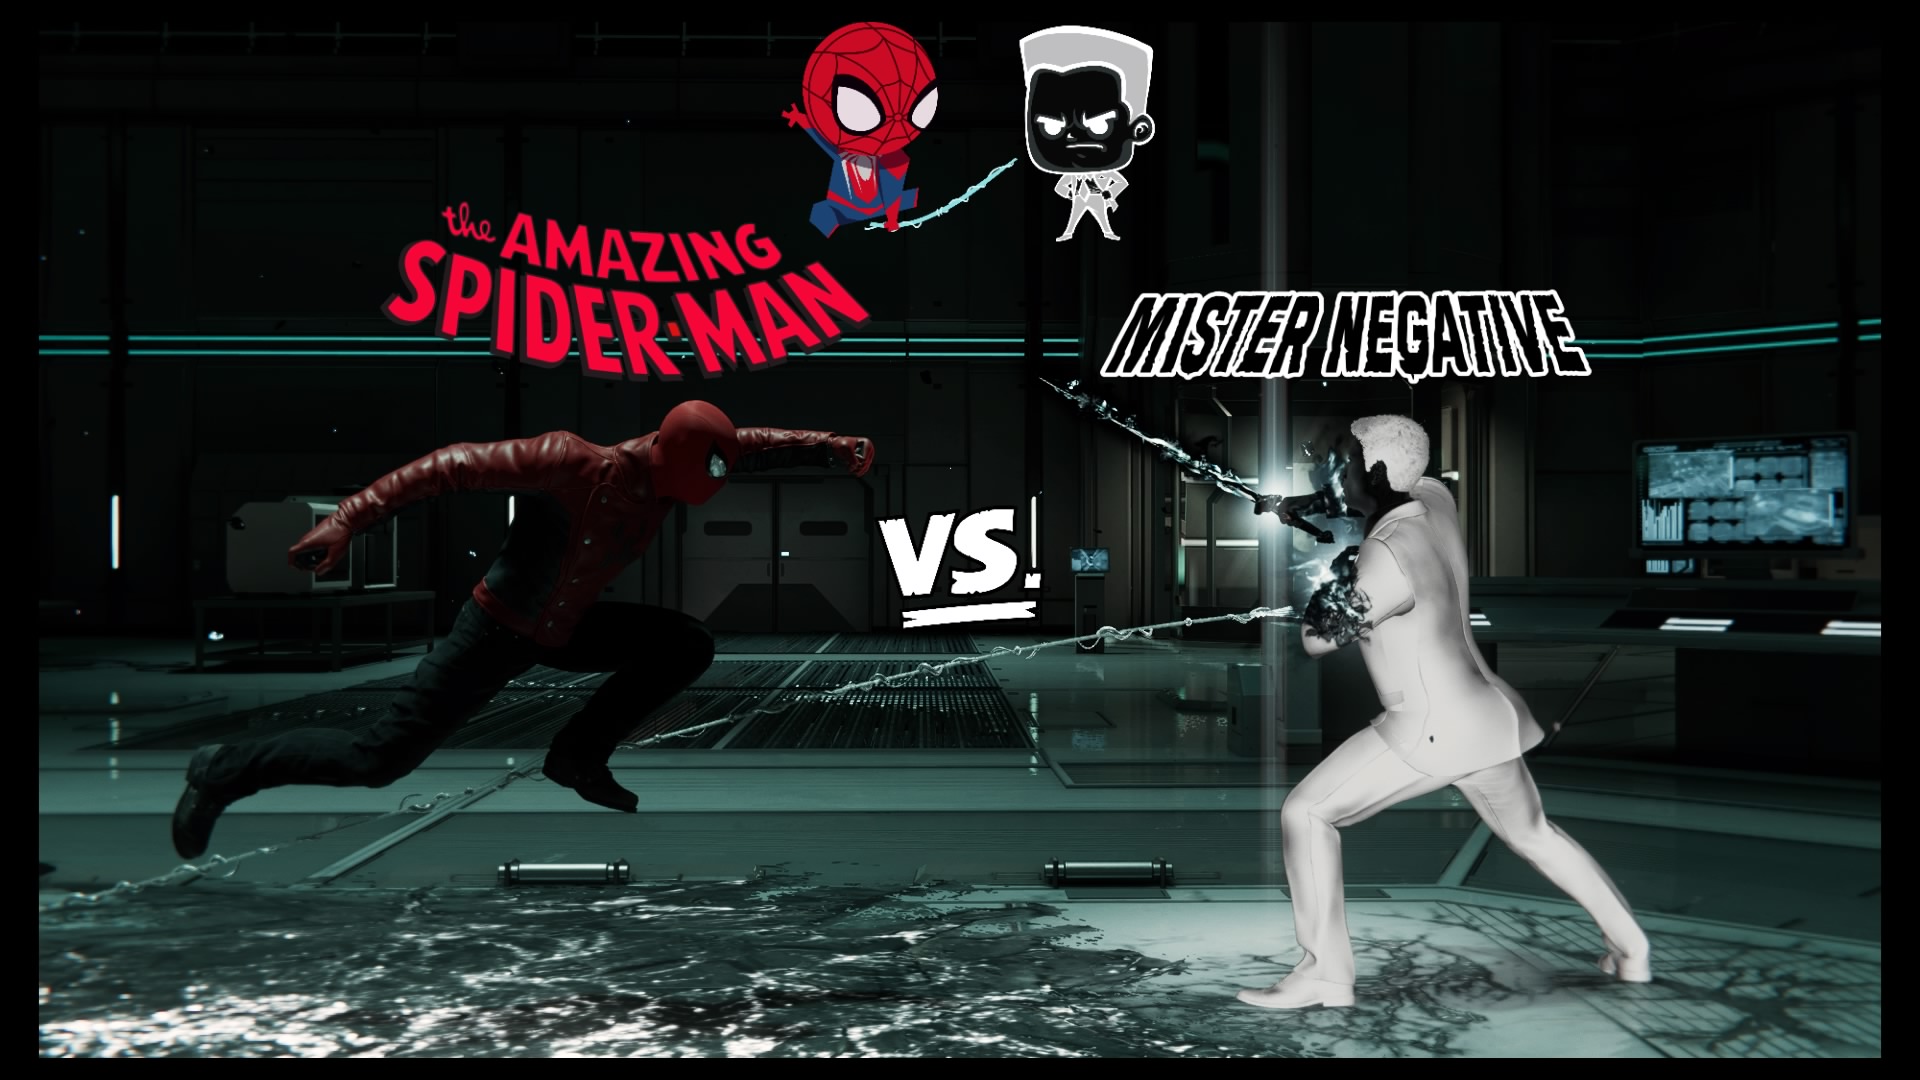 Spider-Man (Last Stand) VS Mister Negative by dannydc1197 on DeviantArt